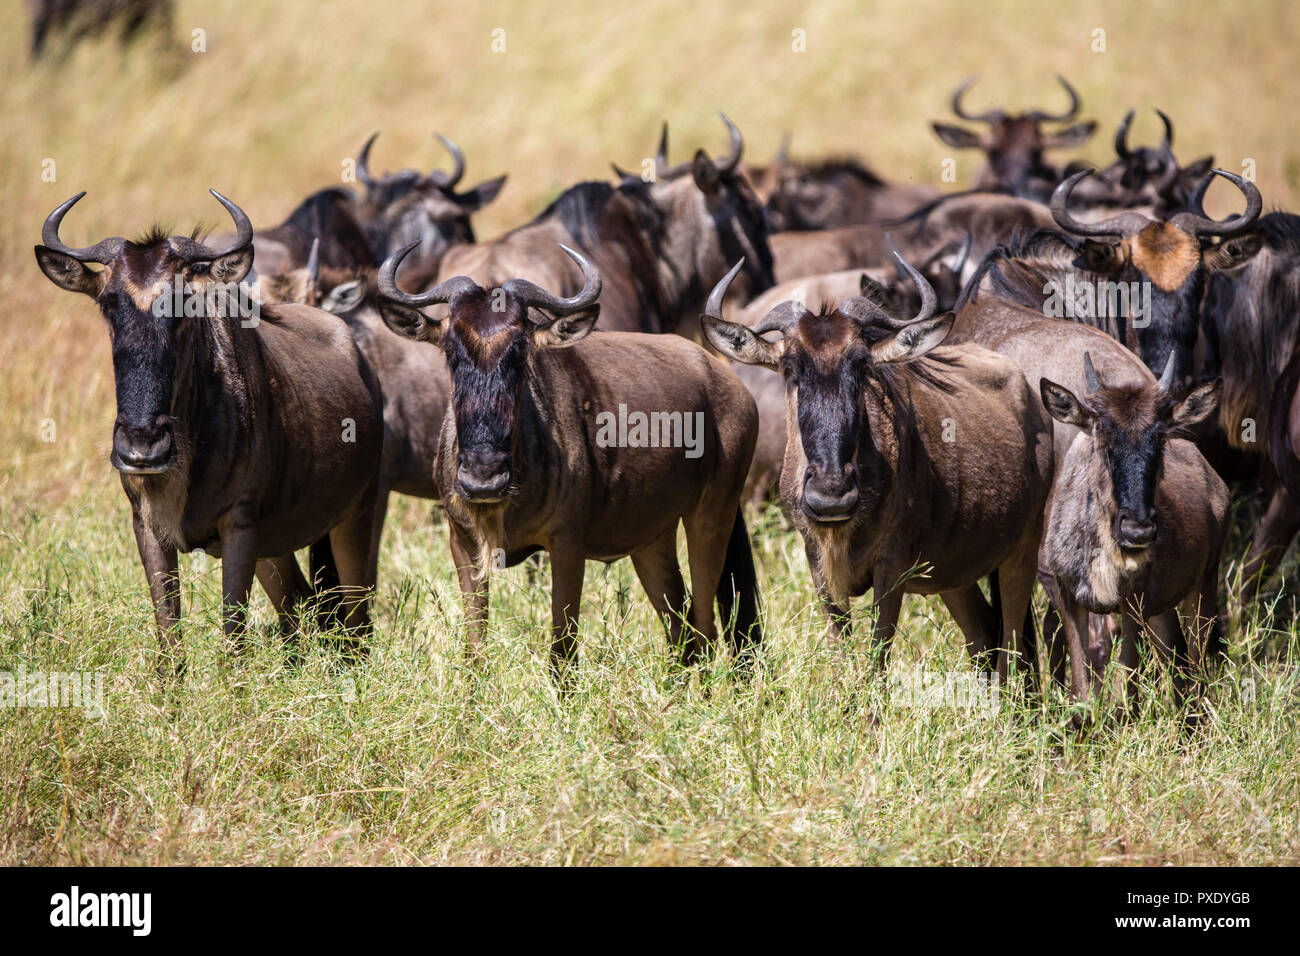 Great Wildebeest Migration in the Serengeti National Park, Tanzania Stock Photo